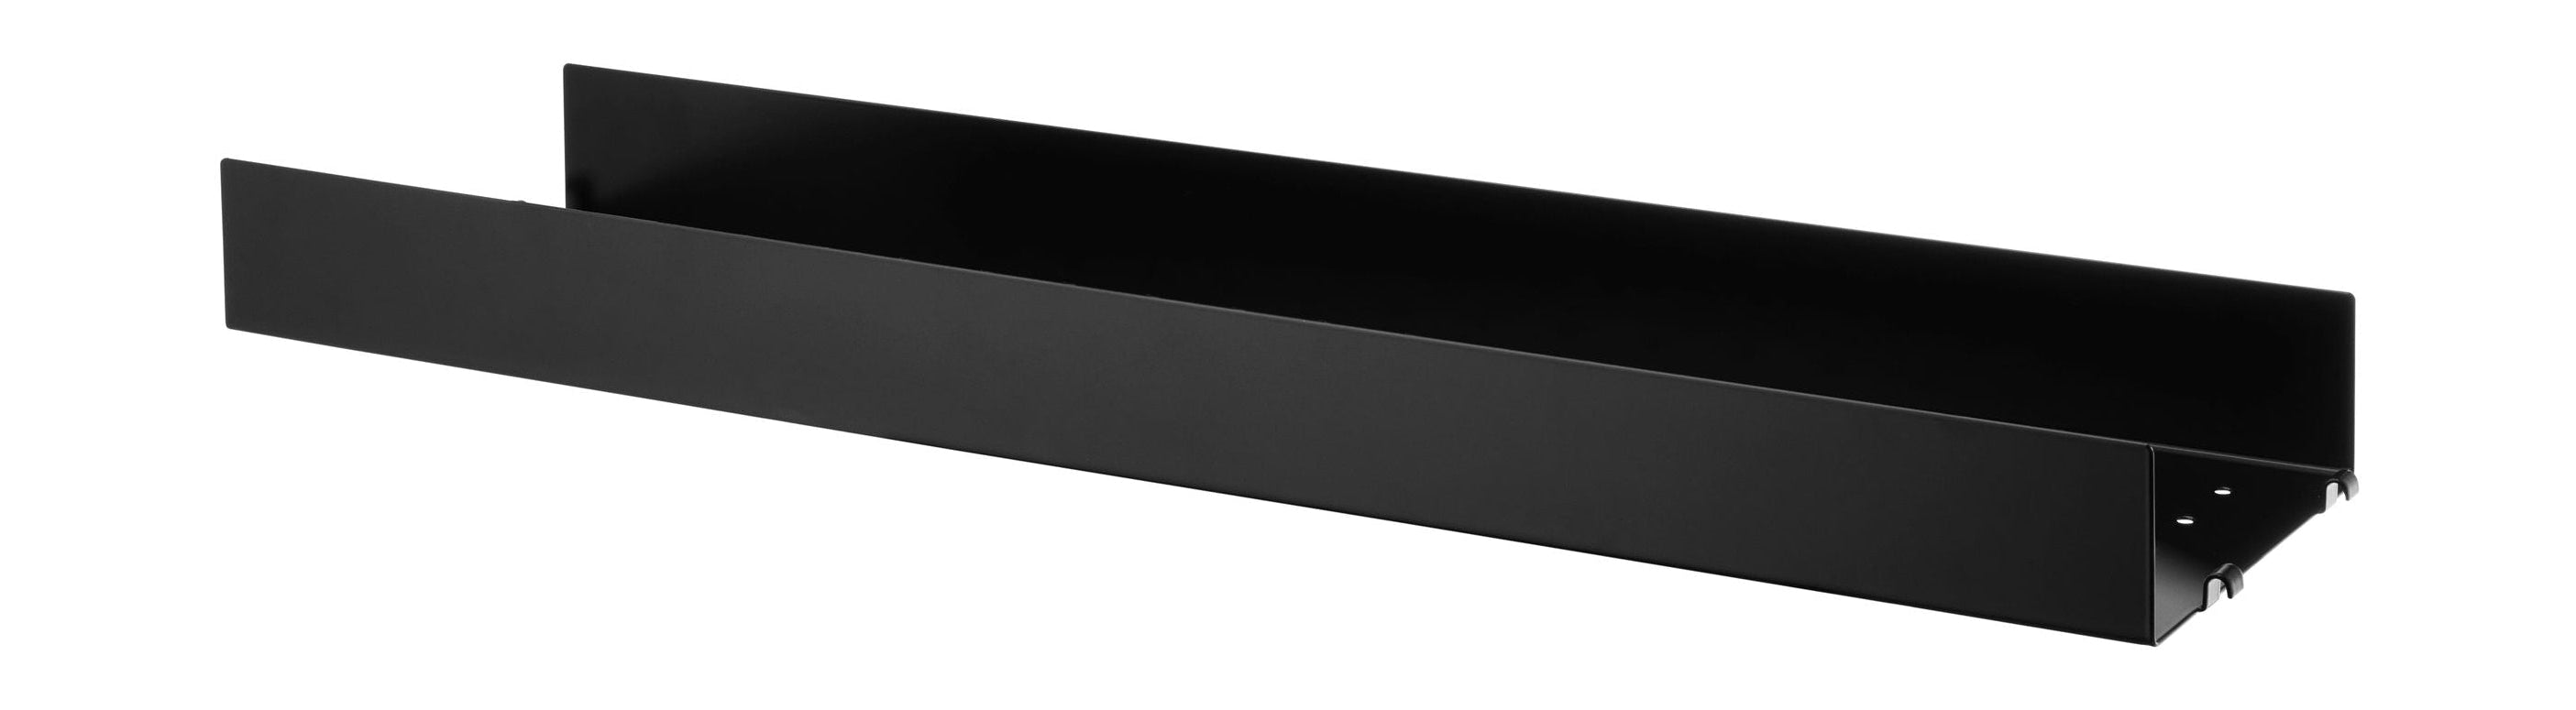 String Furniture String System Metal Shelf With High Edge 20x78 Cm, Black